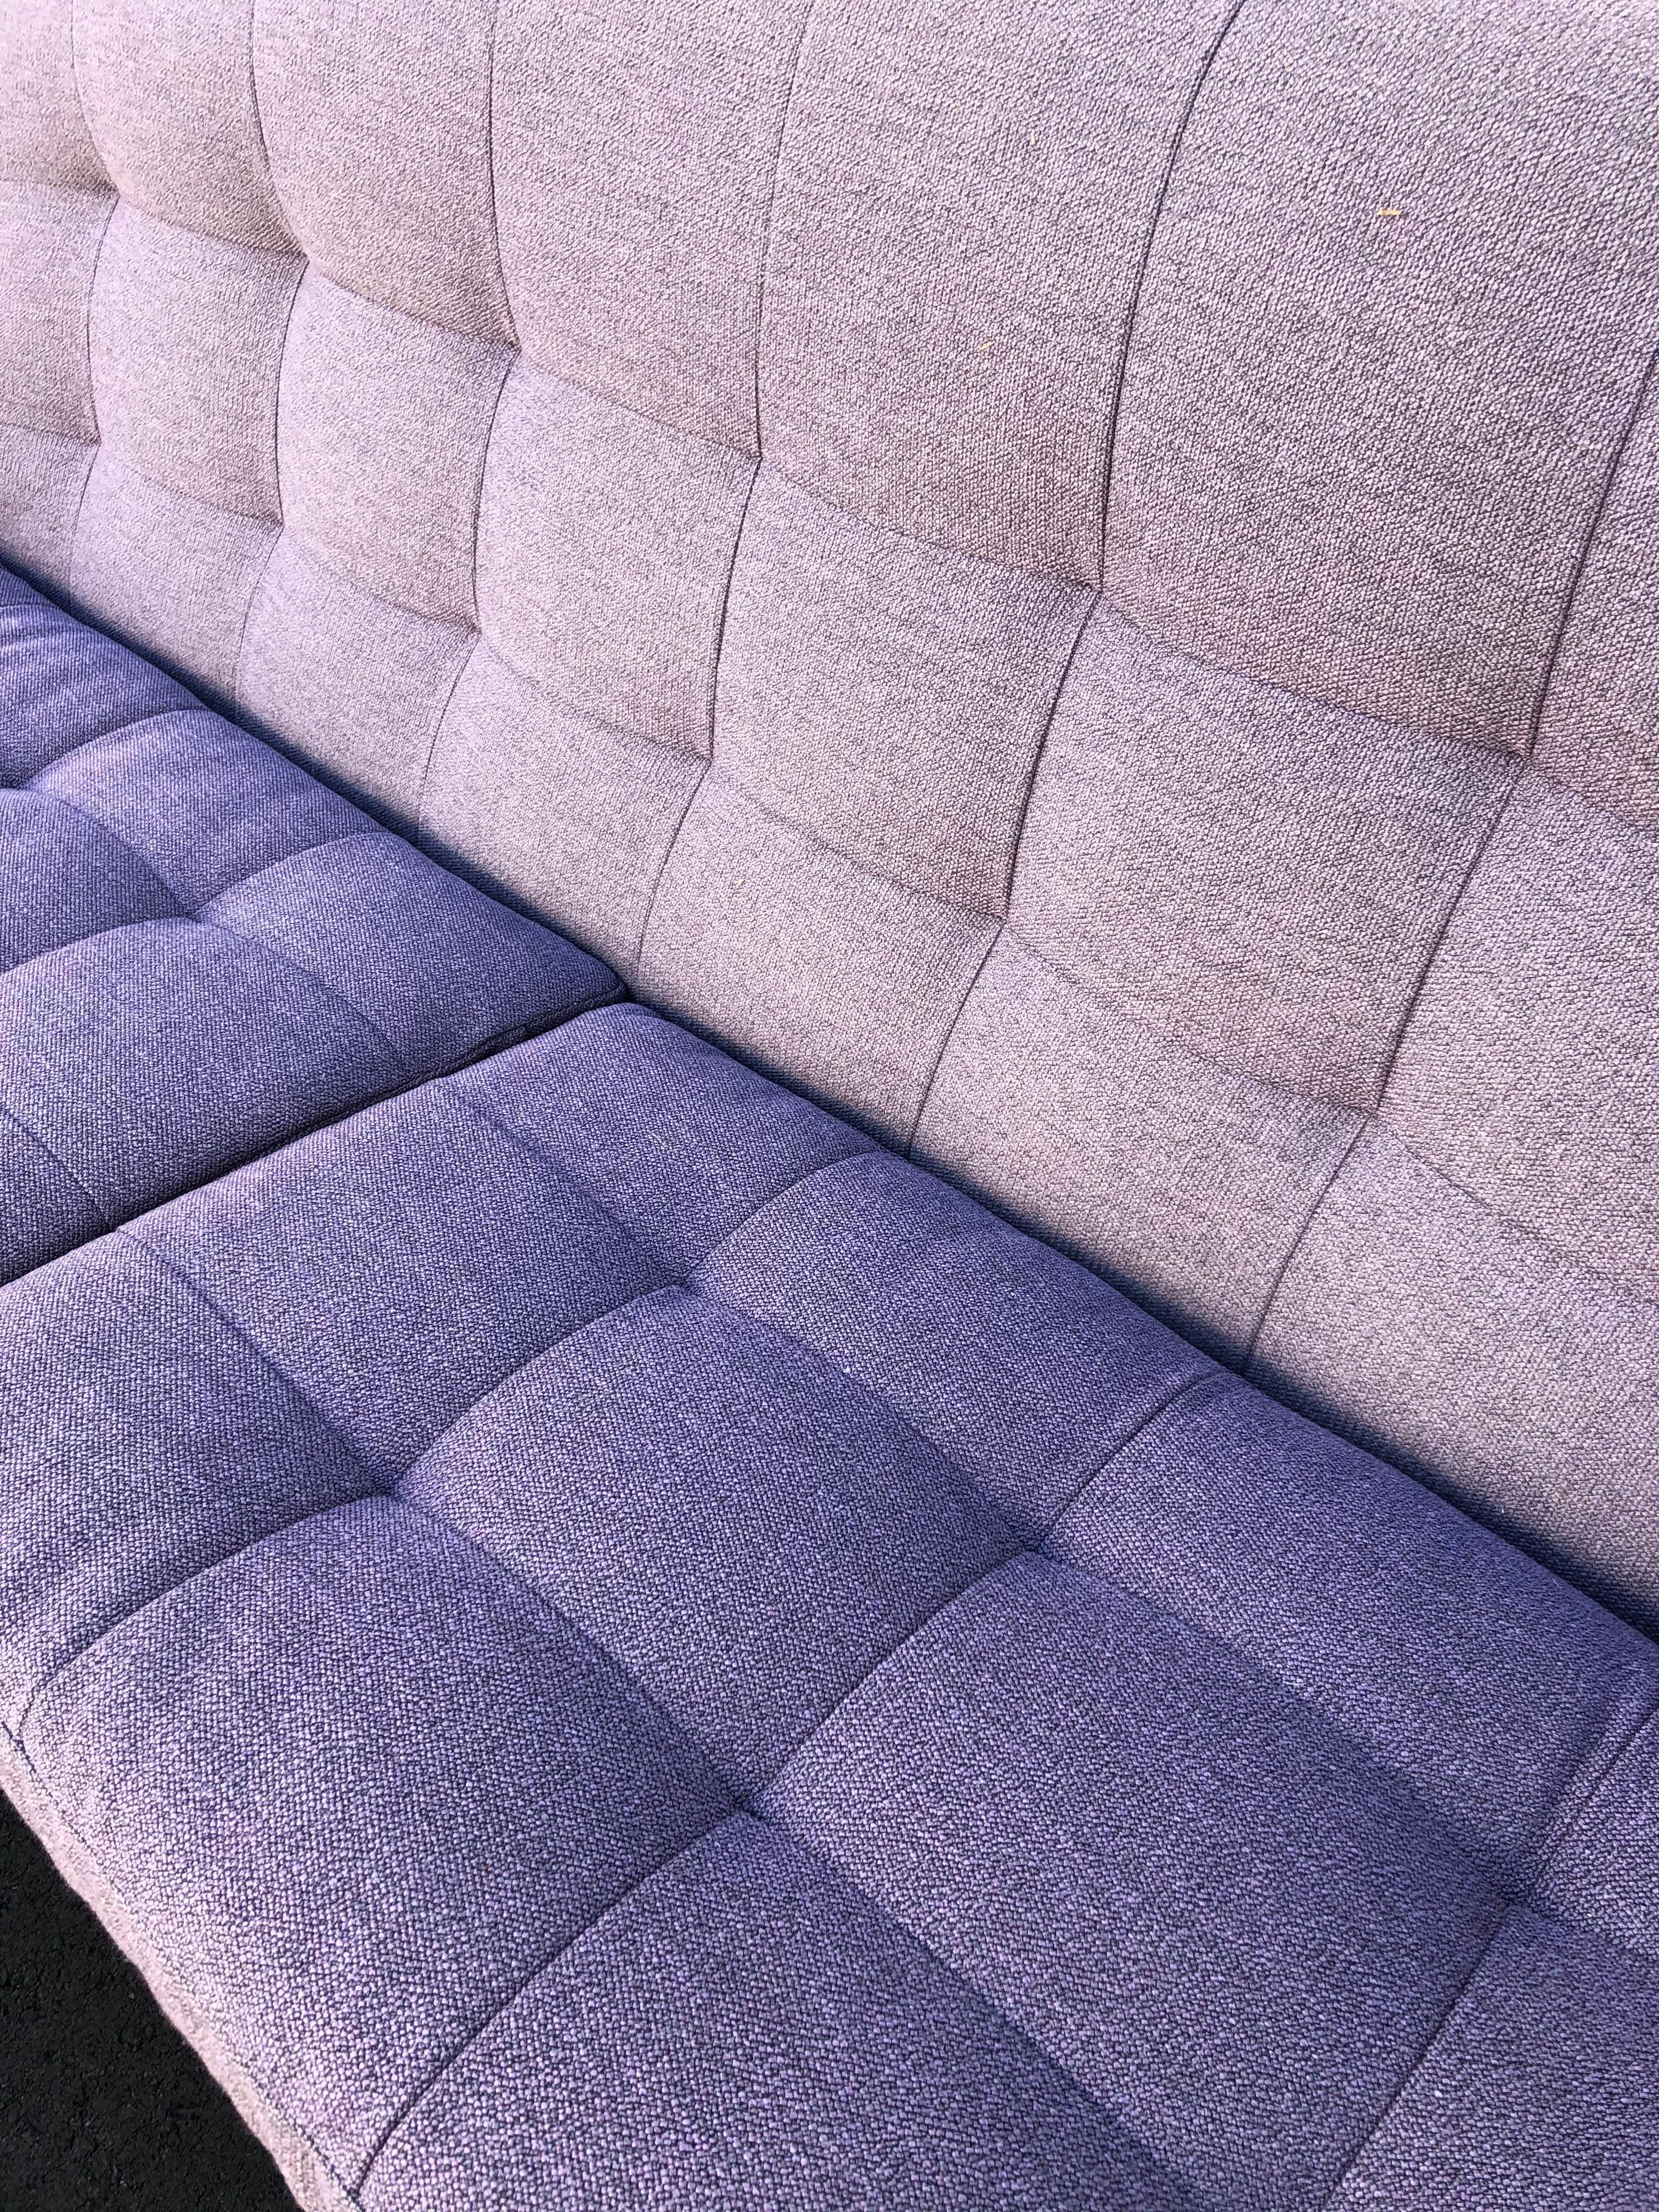 Mid-Century Modern Swedish Vintage Mid Century Modern Sofa  For Sale